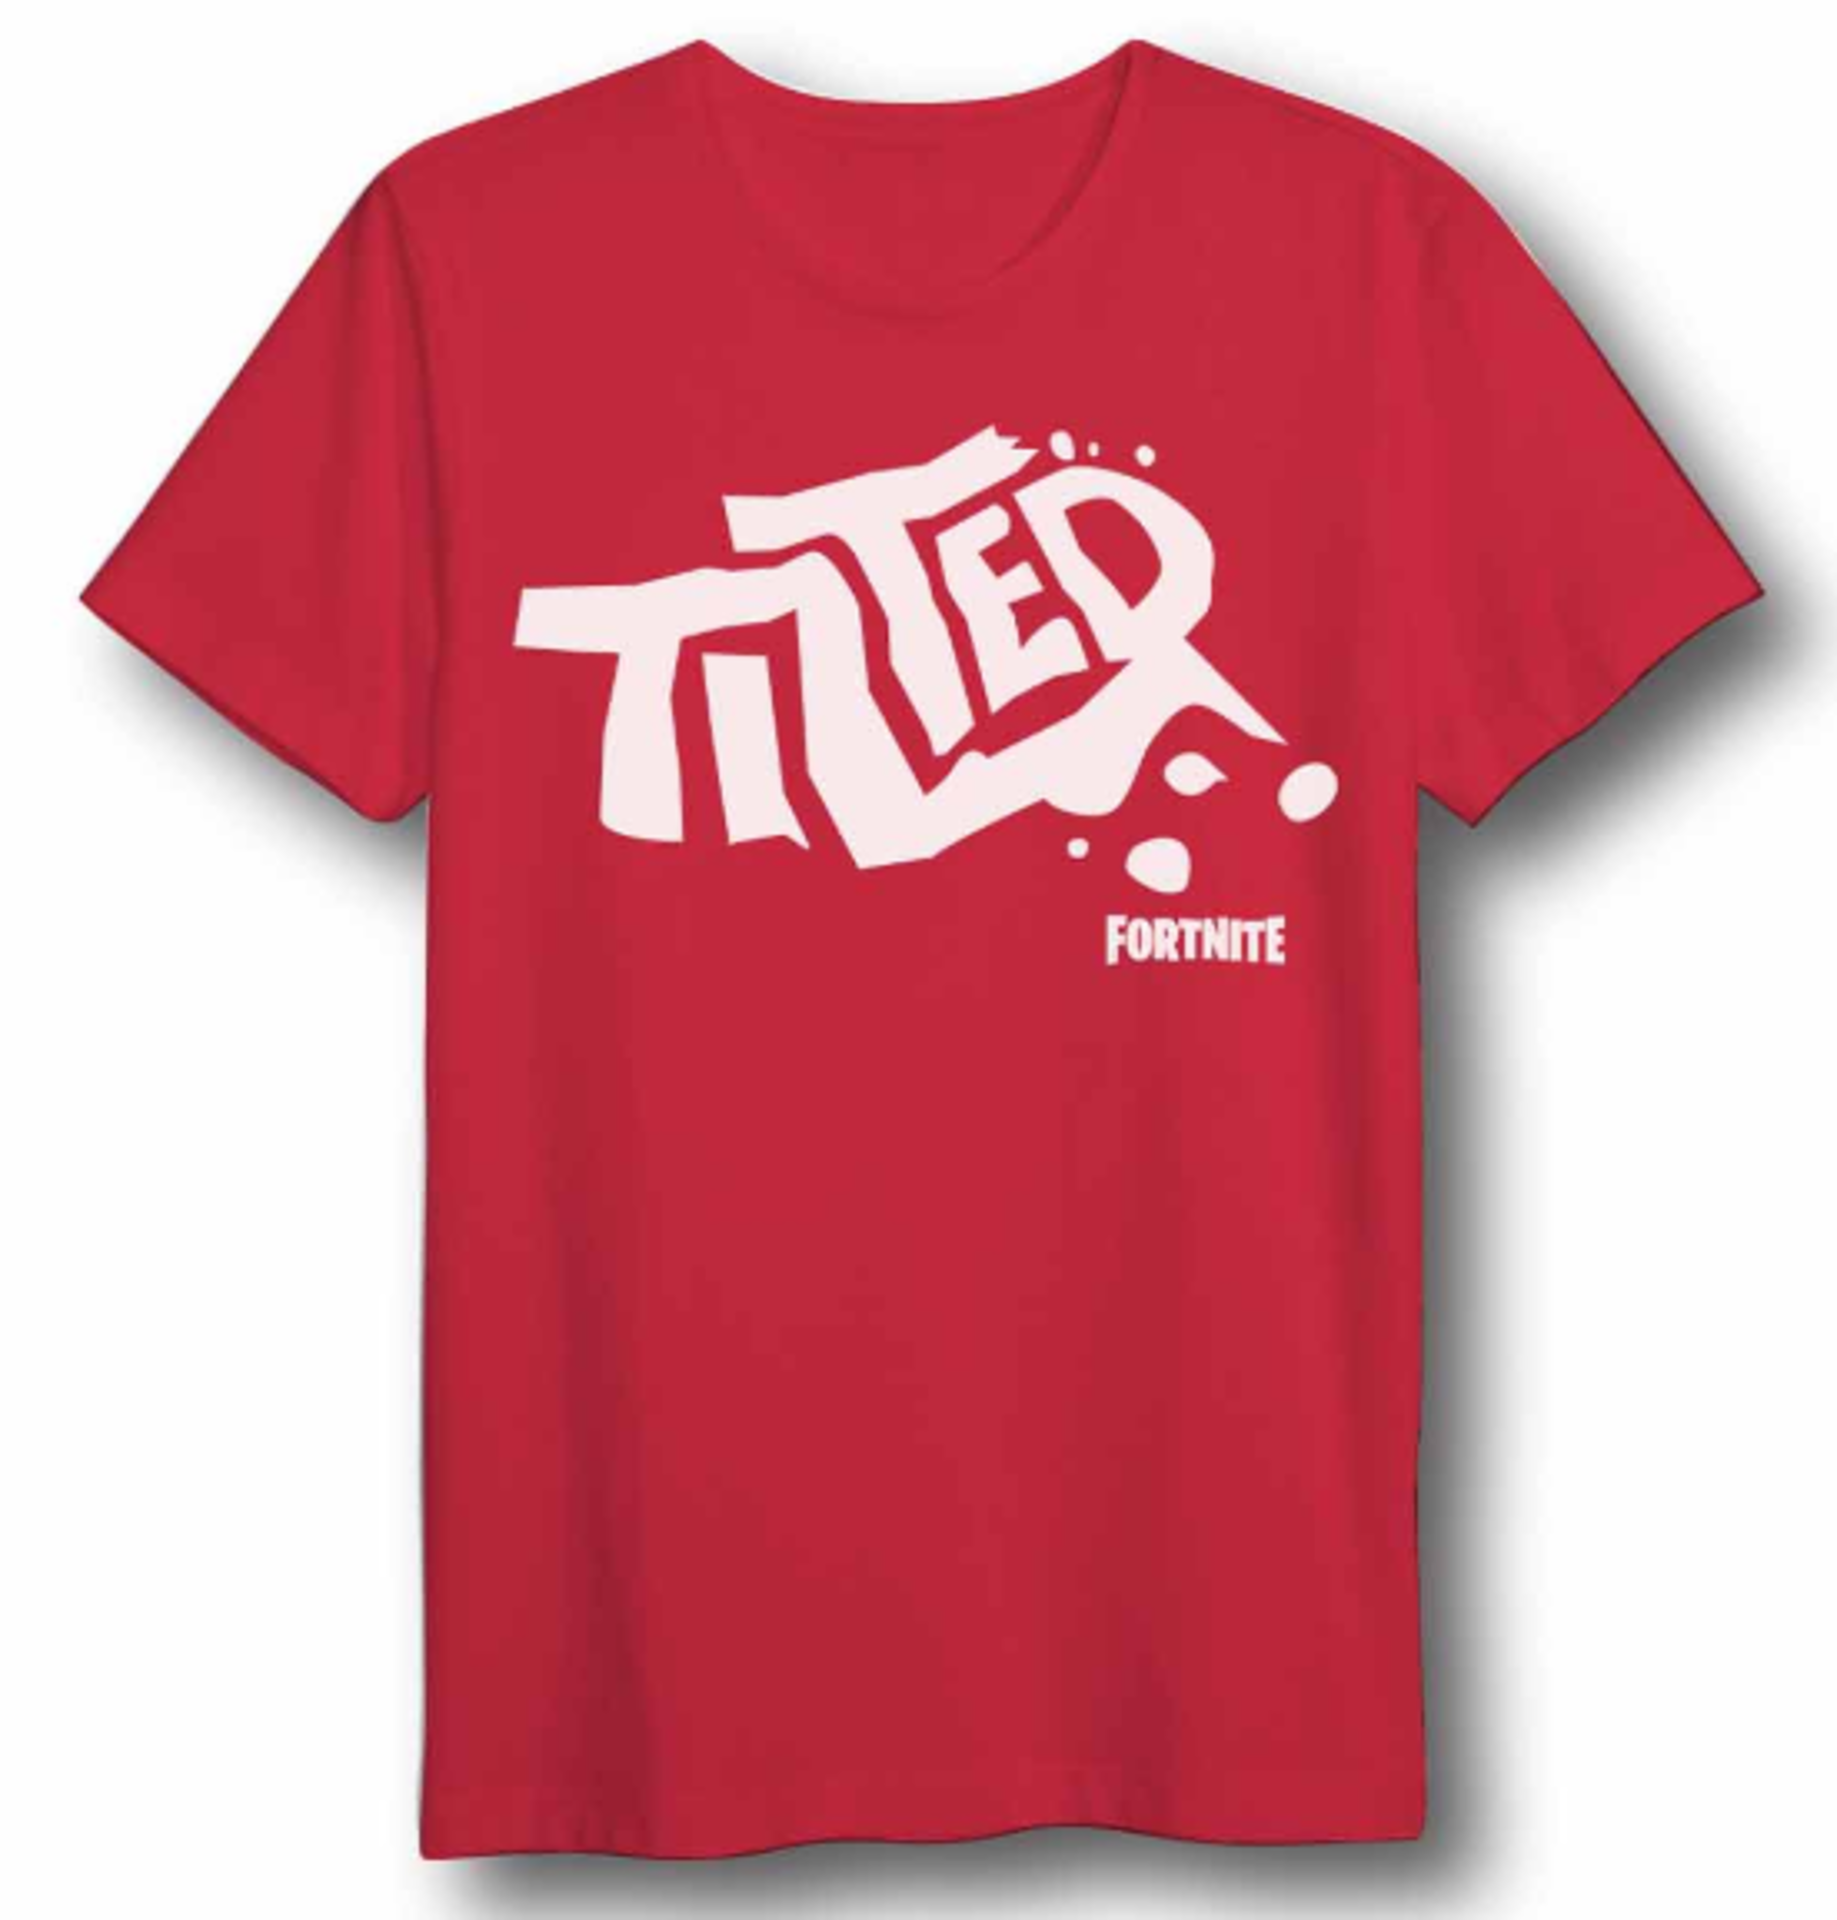 Fortnite - Tilted Red T-Shirt S